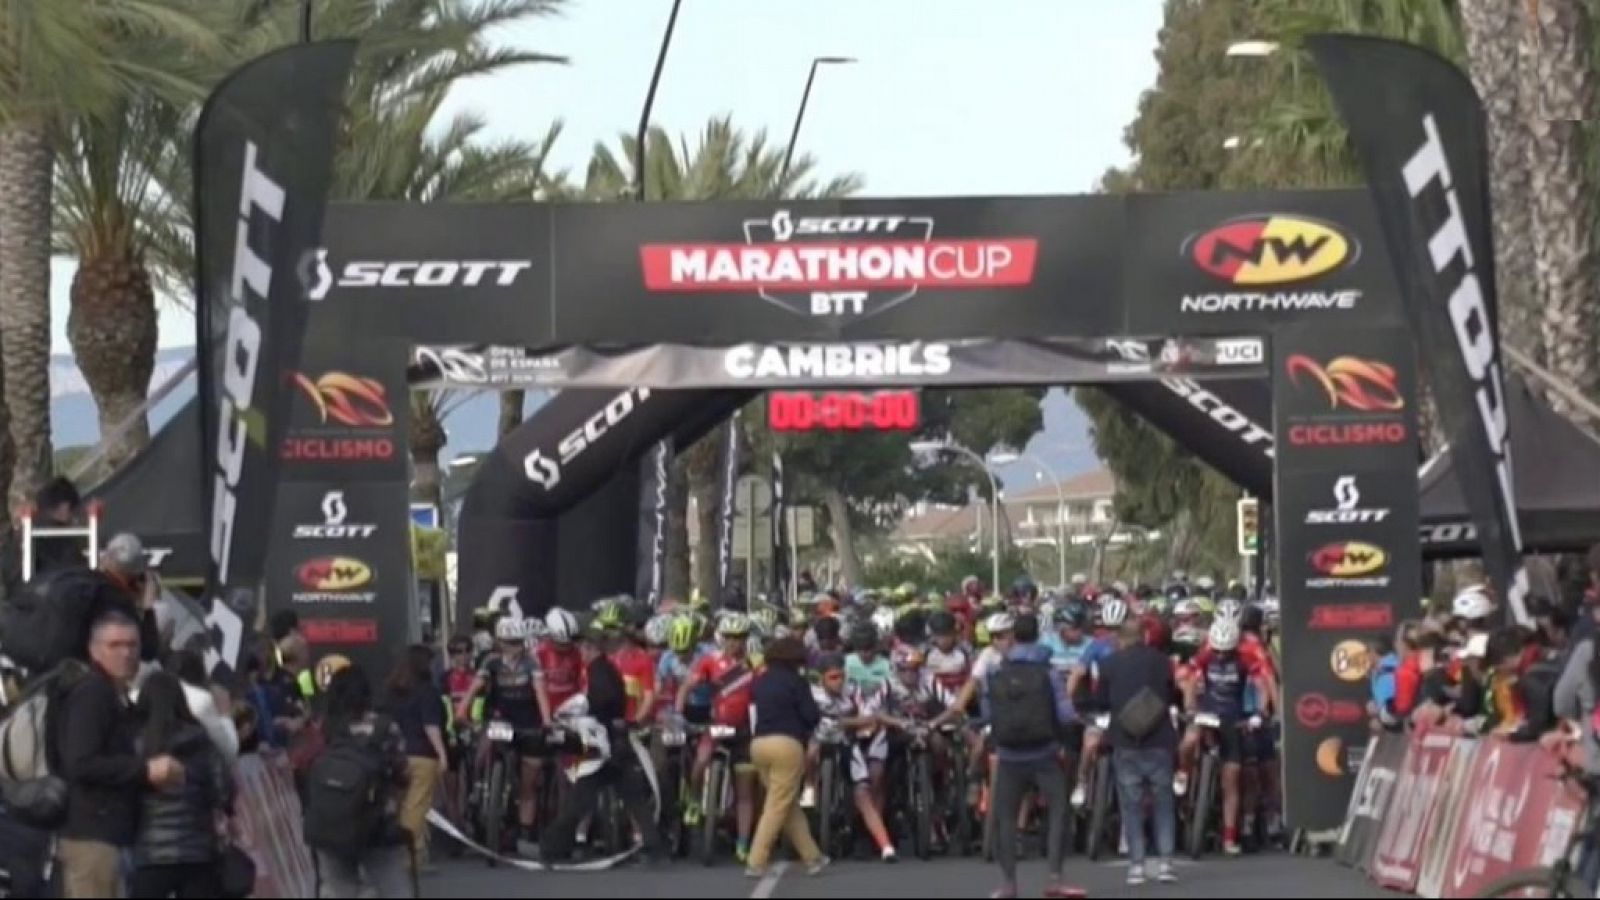 Mountain Bike - Maratón Cup BTT - UCI Maratón World Series 2019 prueba Cambrils